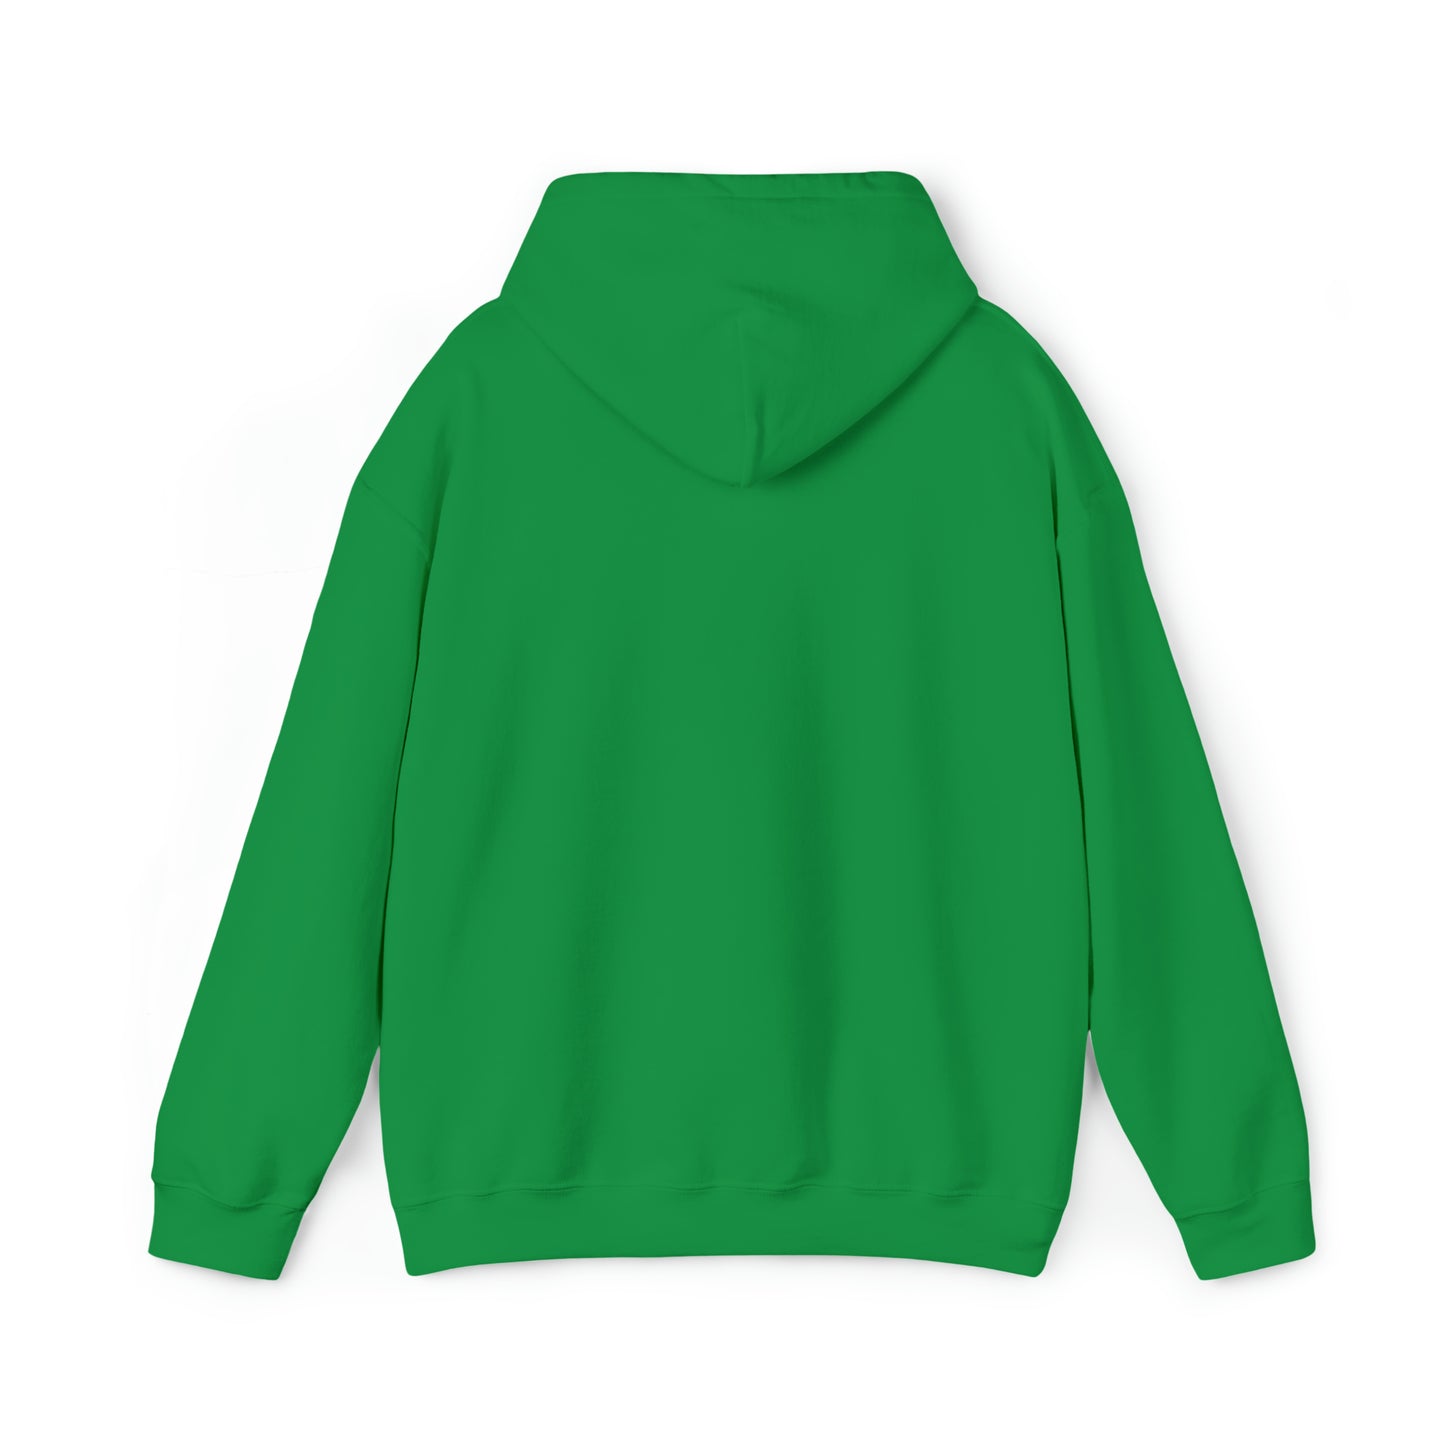 BERTA Unisex Heavy Blend™ Hooded Sweatshirt